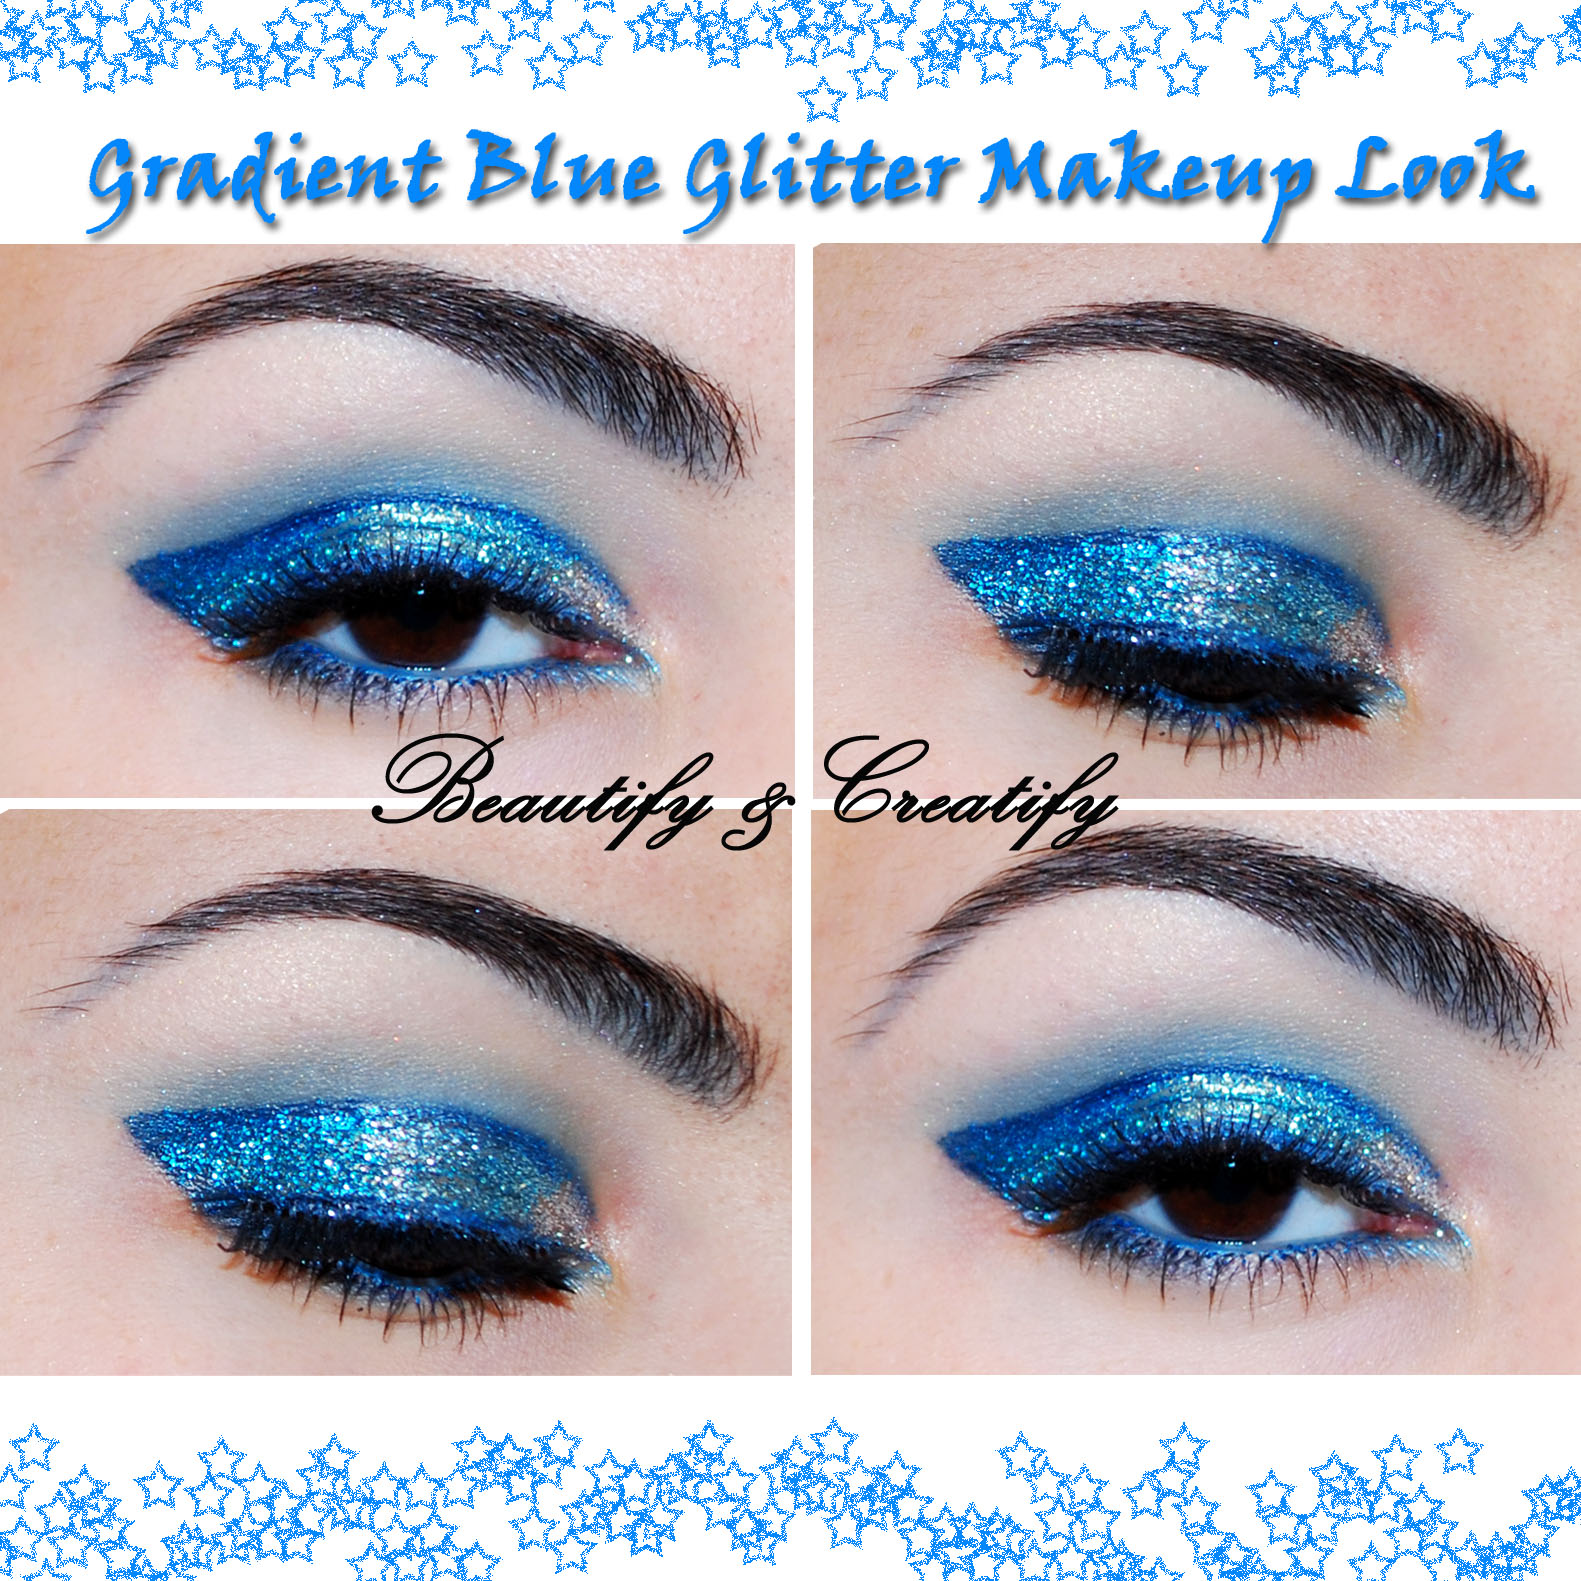 Gradient Blue Glitter Makeup Look